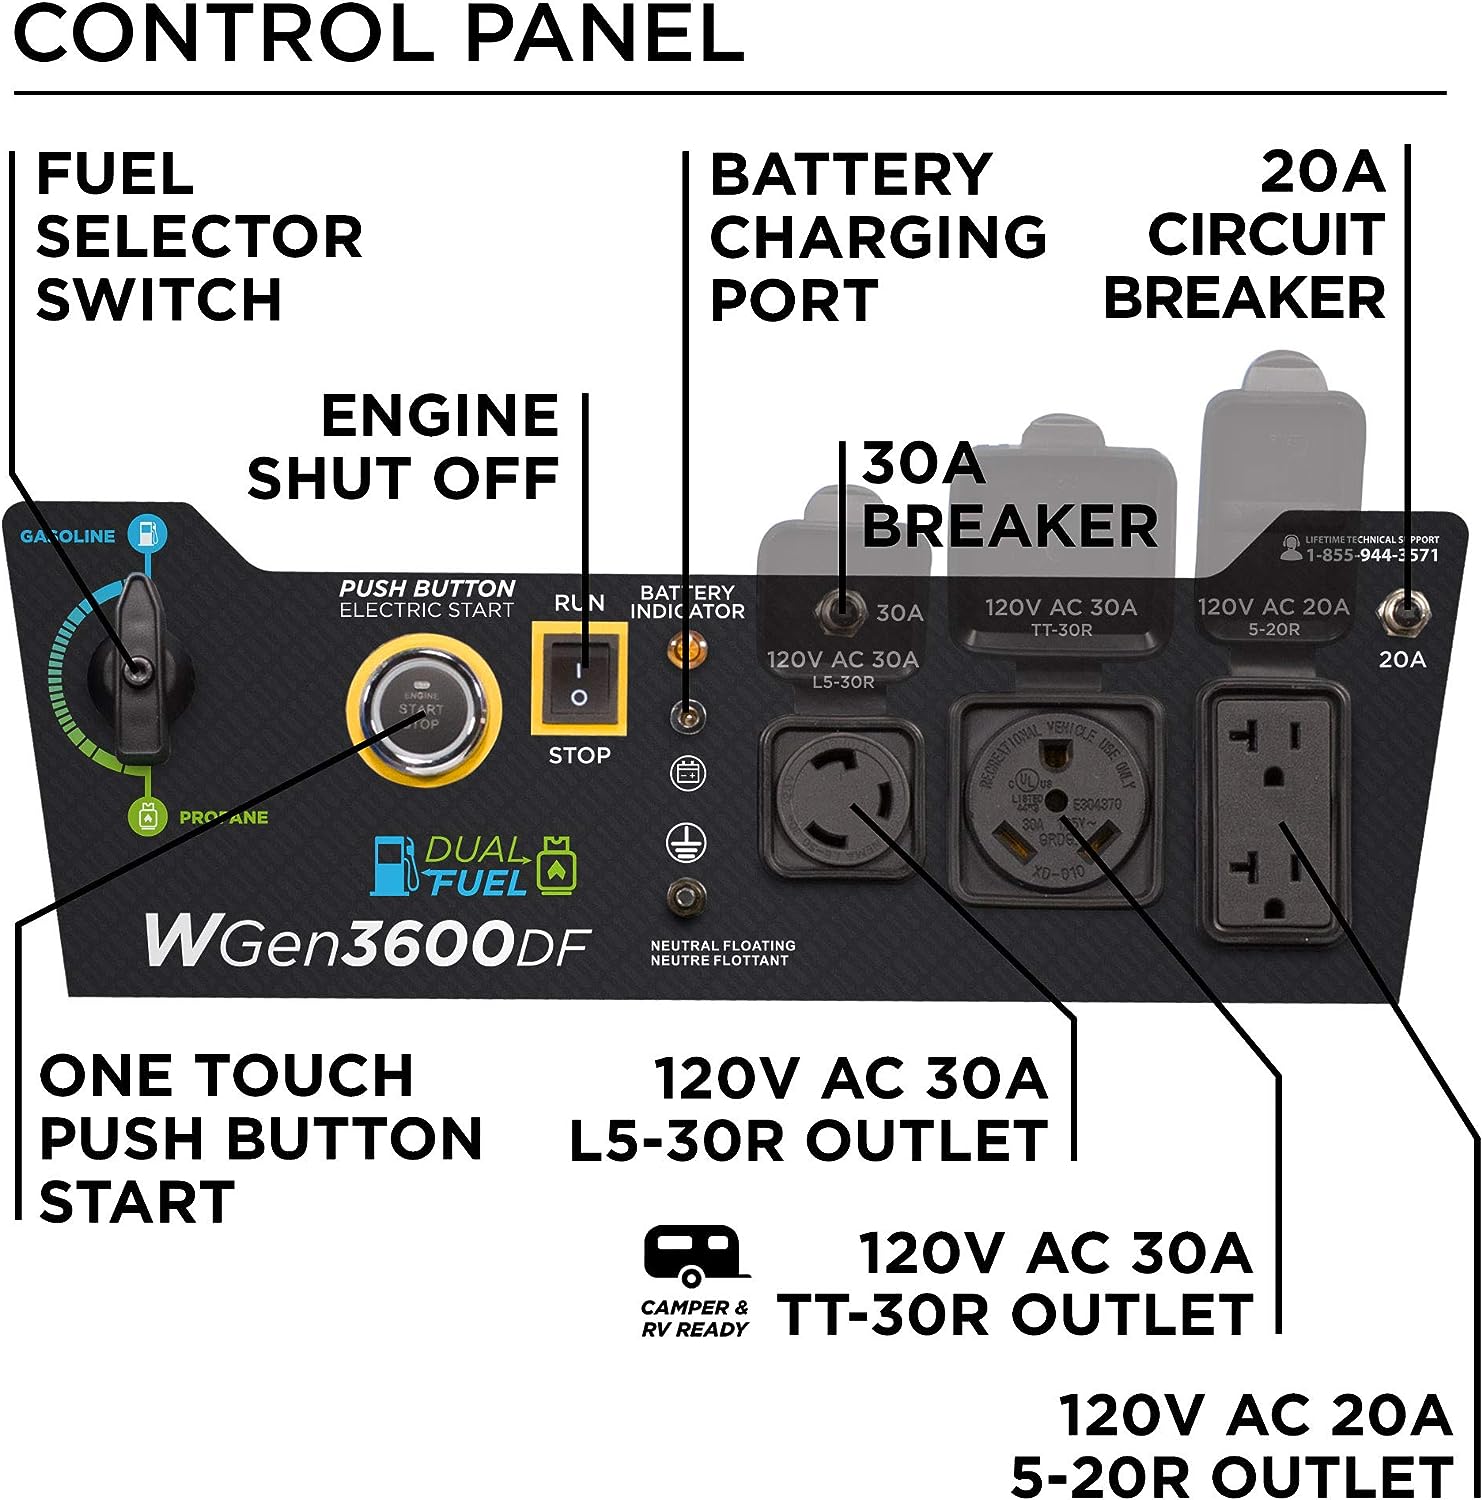 Westinghouse WGen3600DF Generator 3600W/4650W 30 Amp Remote Start Dual Fuel New